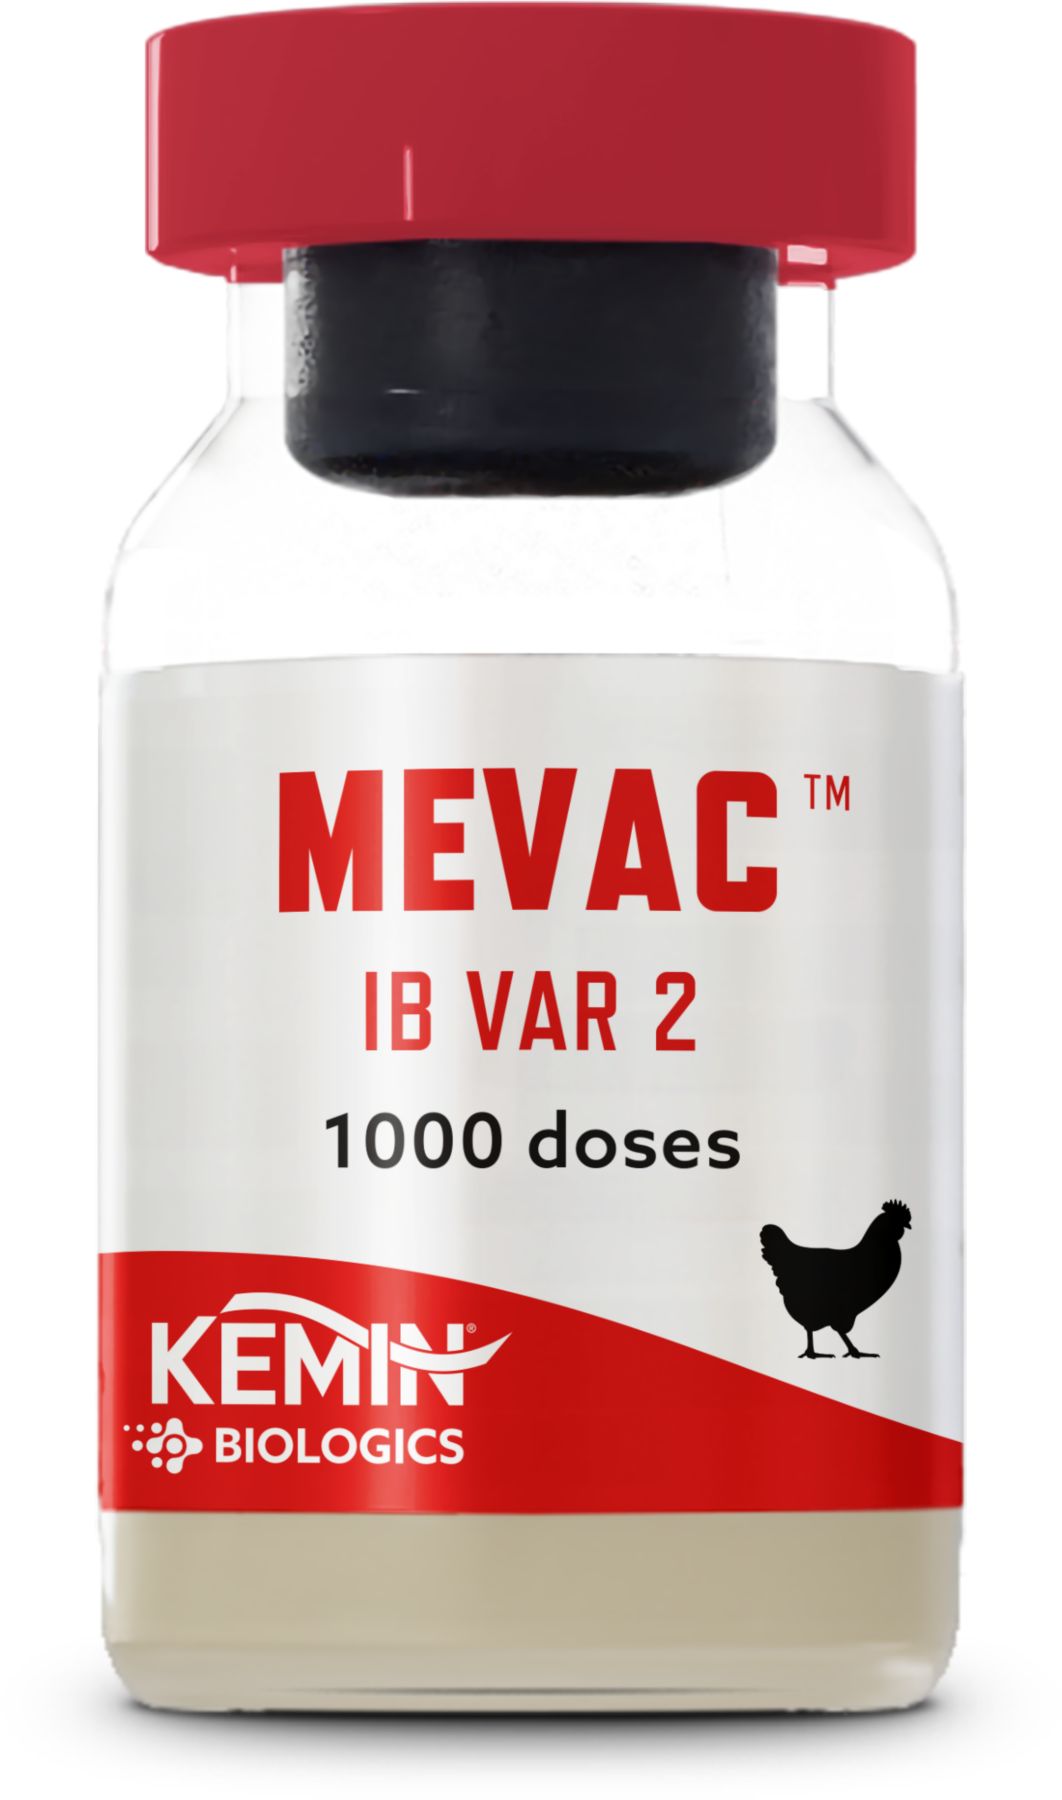 MEVAC IB VAR 2 small label mockup